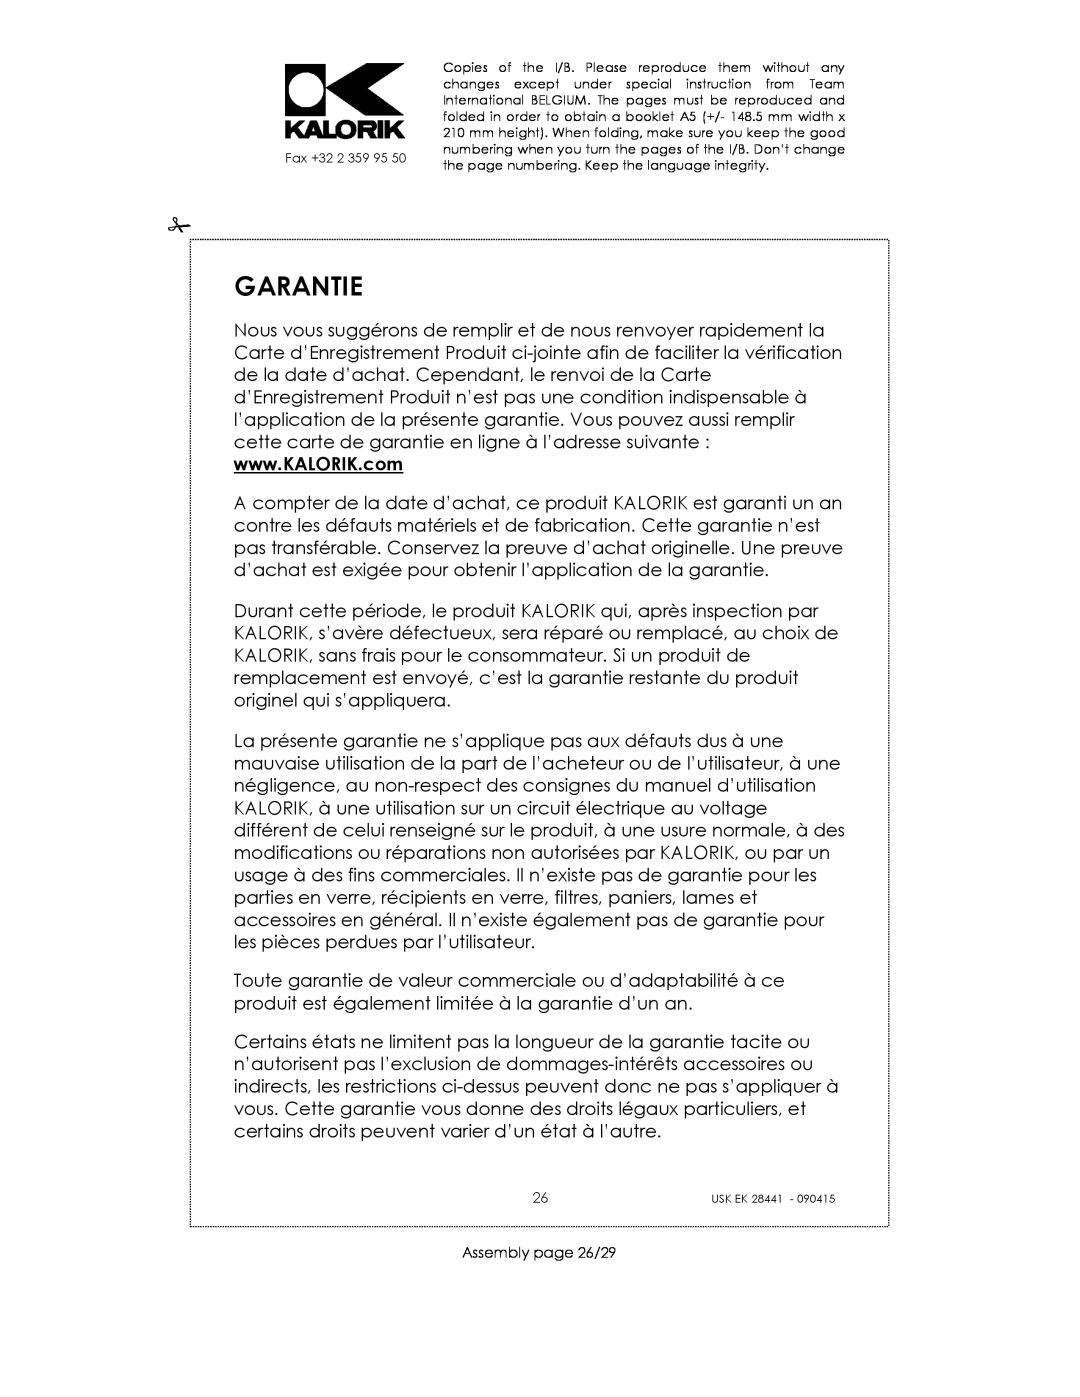 Kalorik USK EK 28441 manual Garantie, Assembly page 26/29 